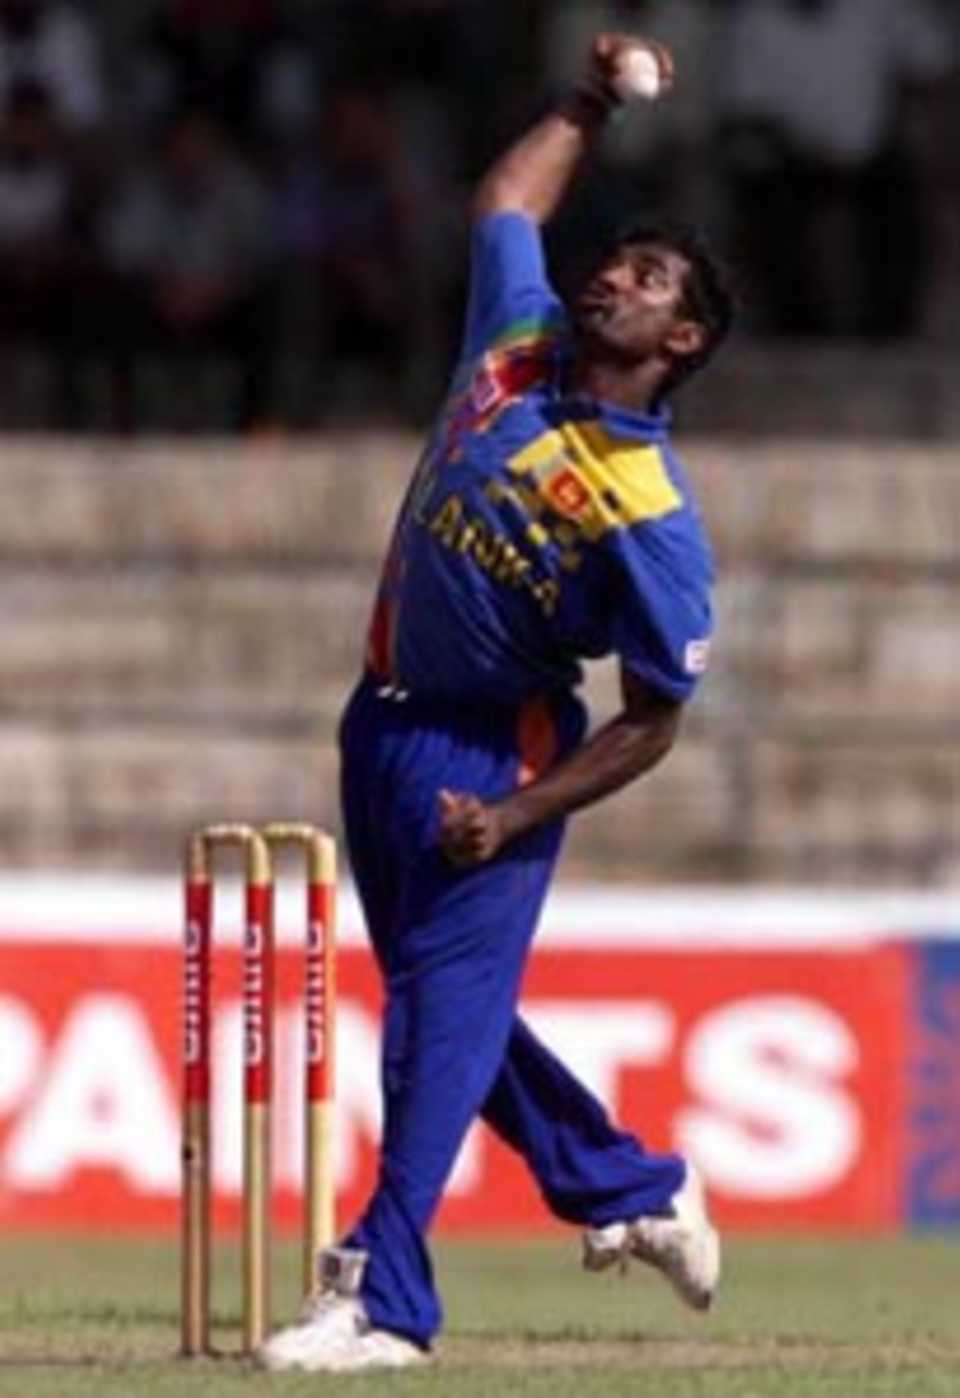 25 Aug 1999: Muttiah Muralitharan of Sri Lanka bowling during the match between Sri Lanka and India at Premadasa Stadium, Colombo, Sri Lanka.